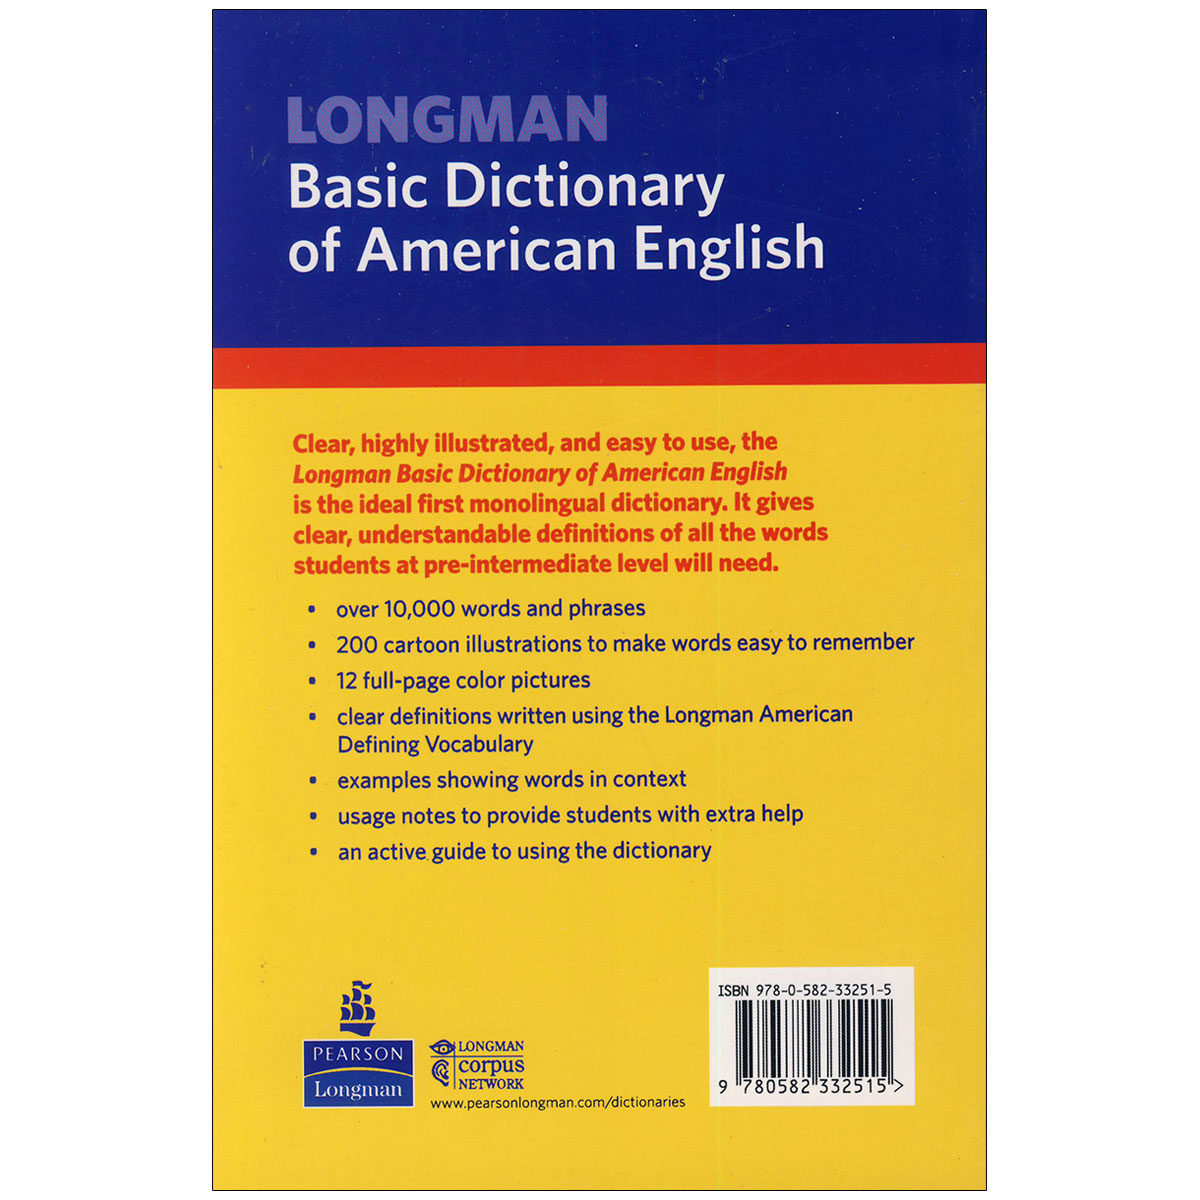 Longman-Basic-Dictionary-of-American-English-back